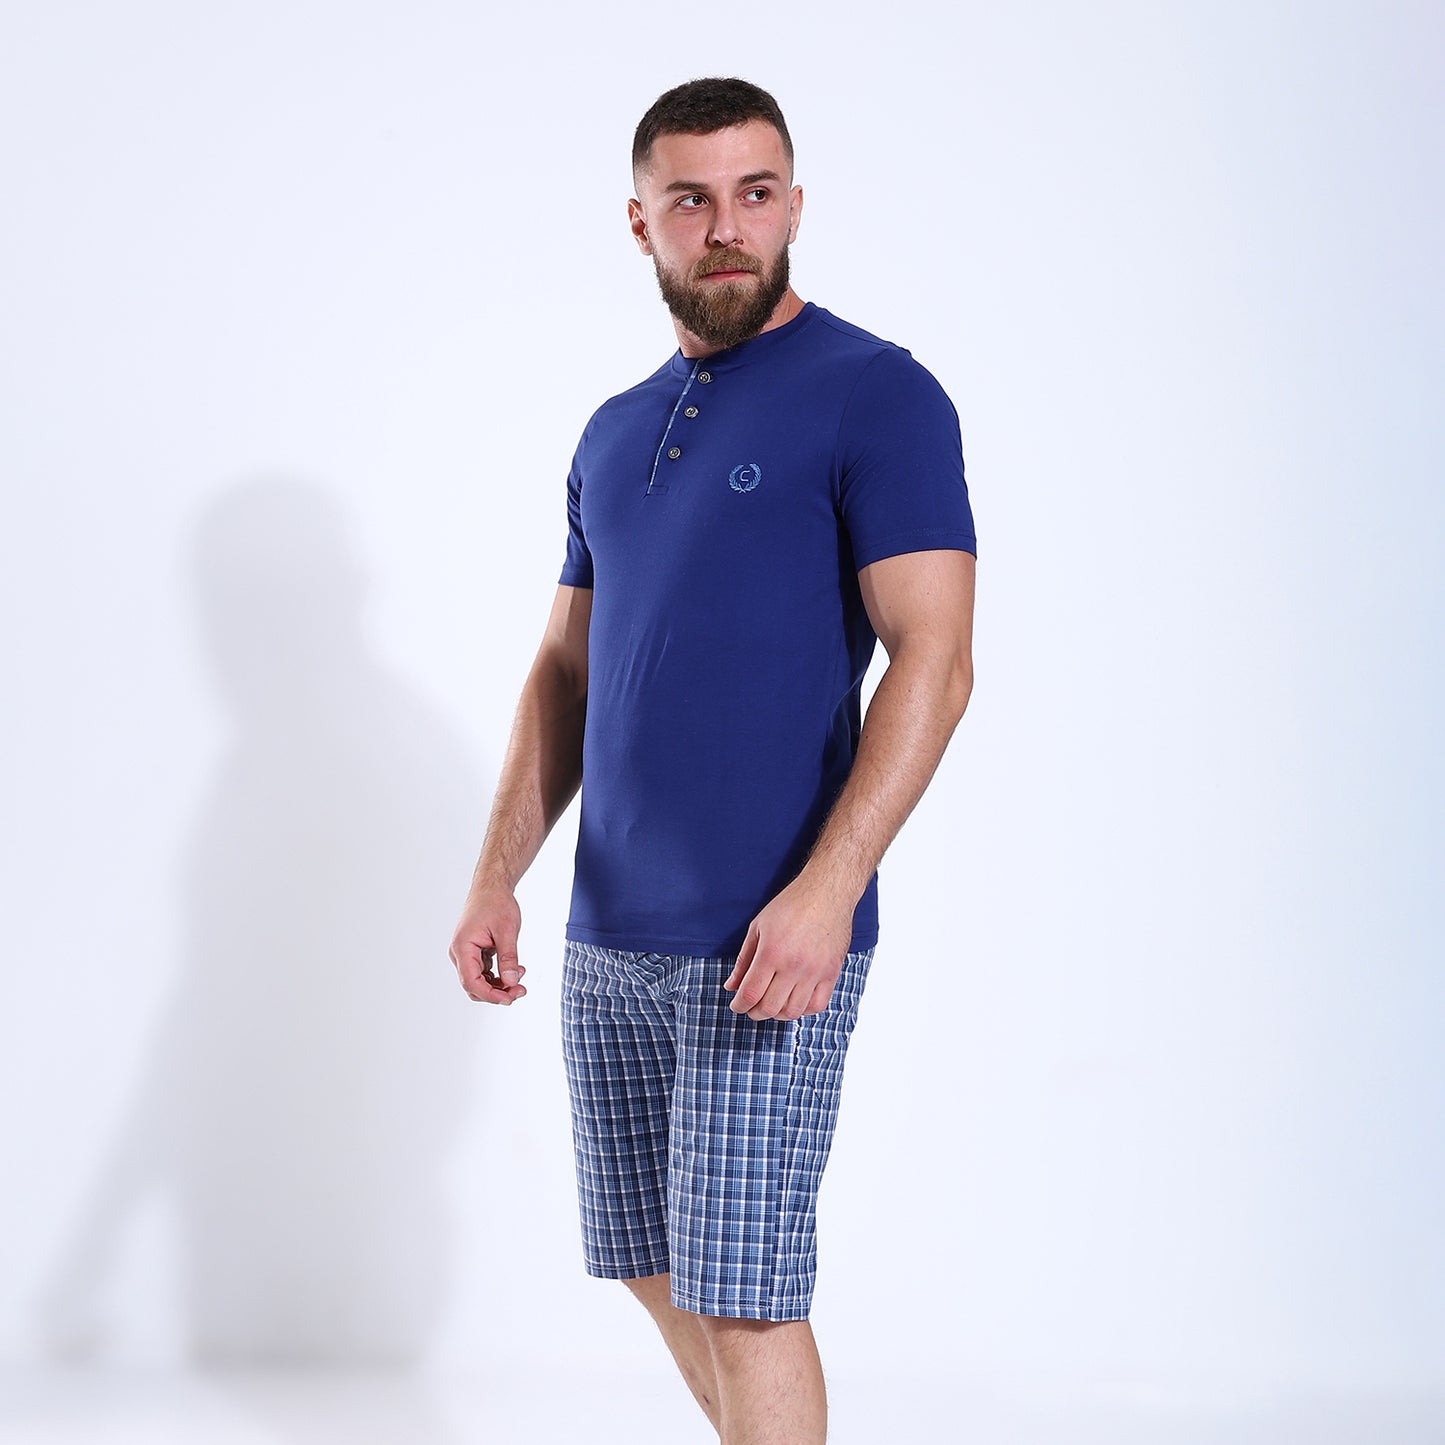 Men's Henley Tee With Checkered Shorts Pajama203